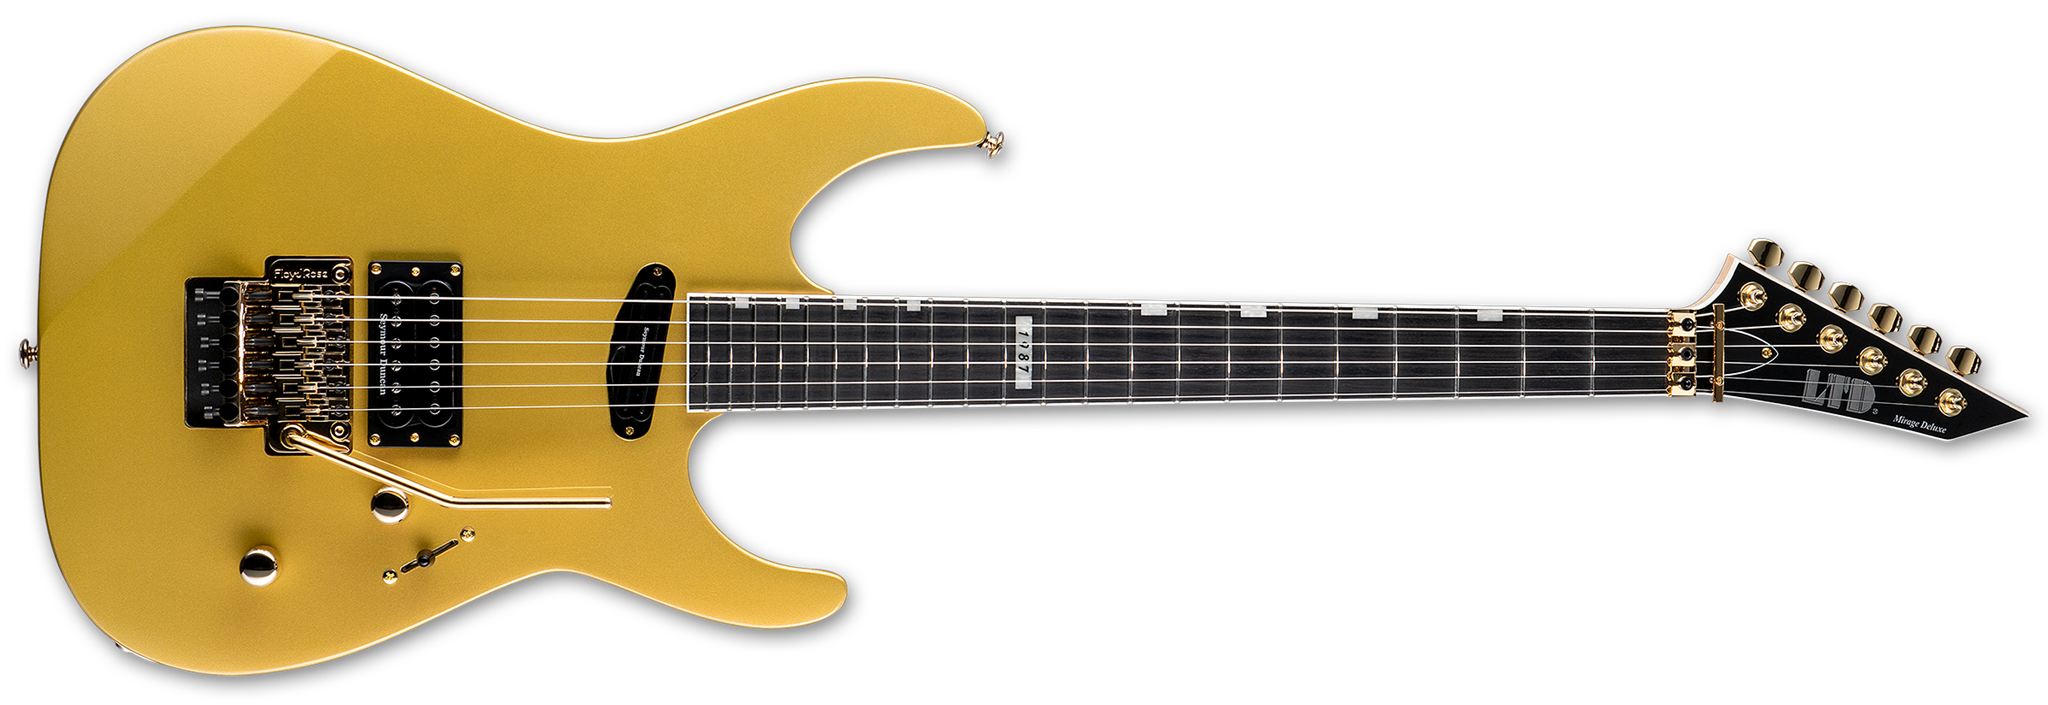 LTD Mirage Deluxe '87 Metallic Gold    6-String Electric Guitar  